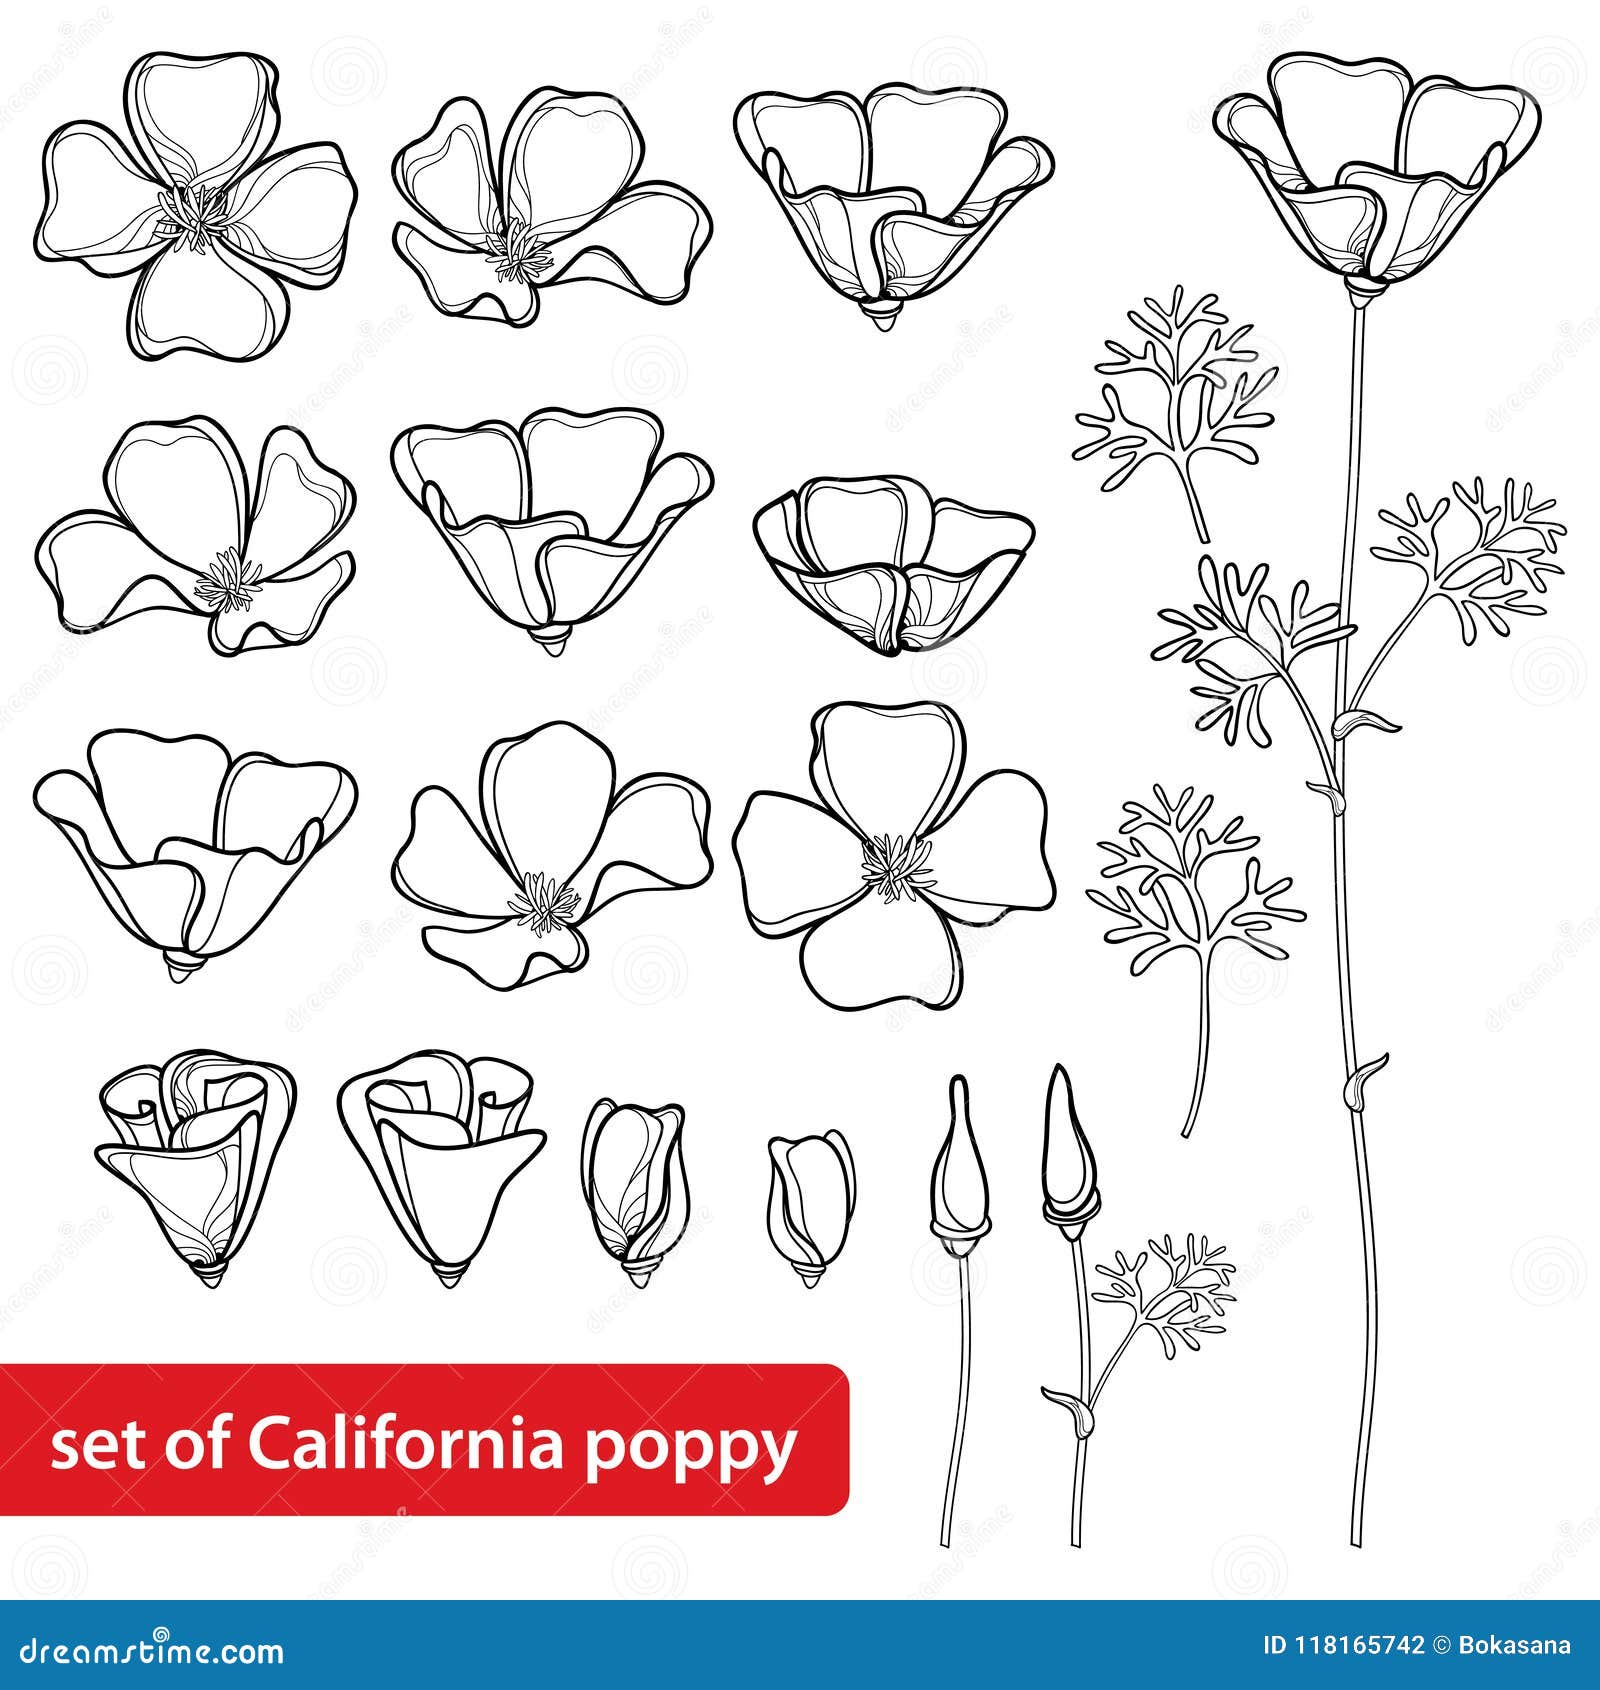 Poppy Flower Tattoo: Meanings & 30 Design Ideas - Nomi Chi